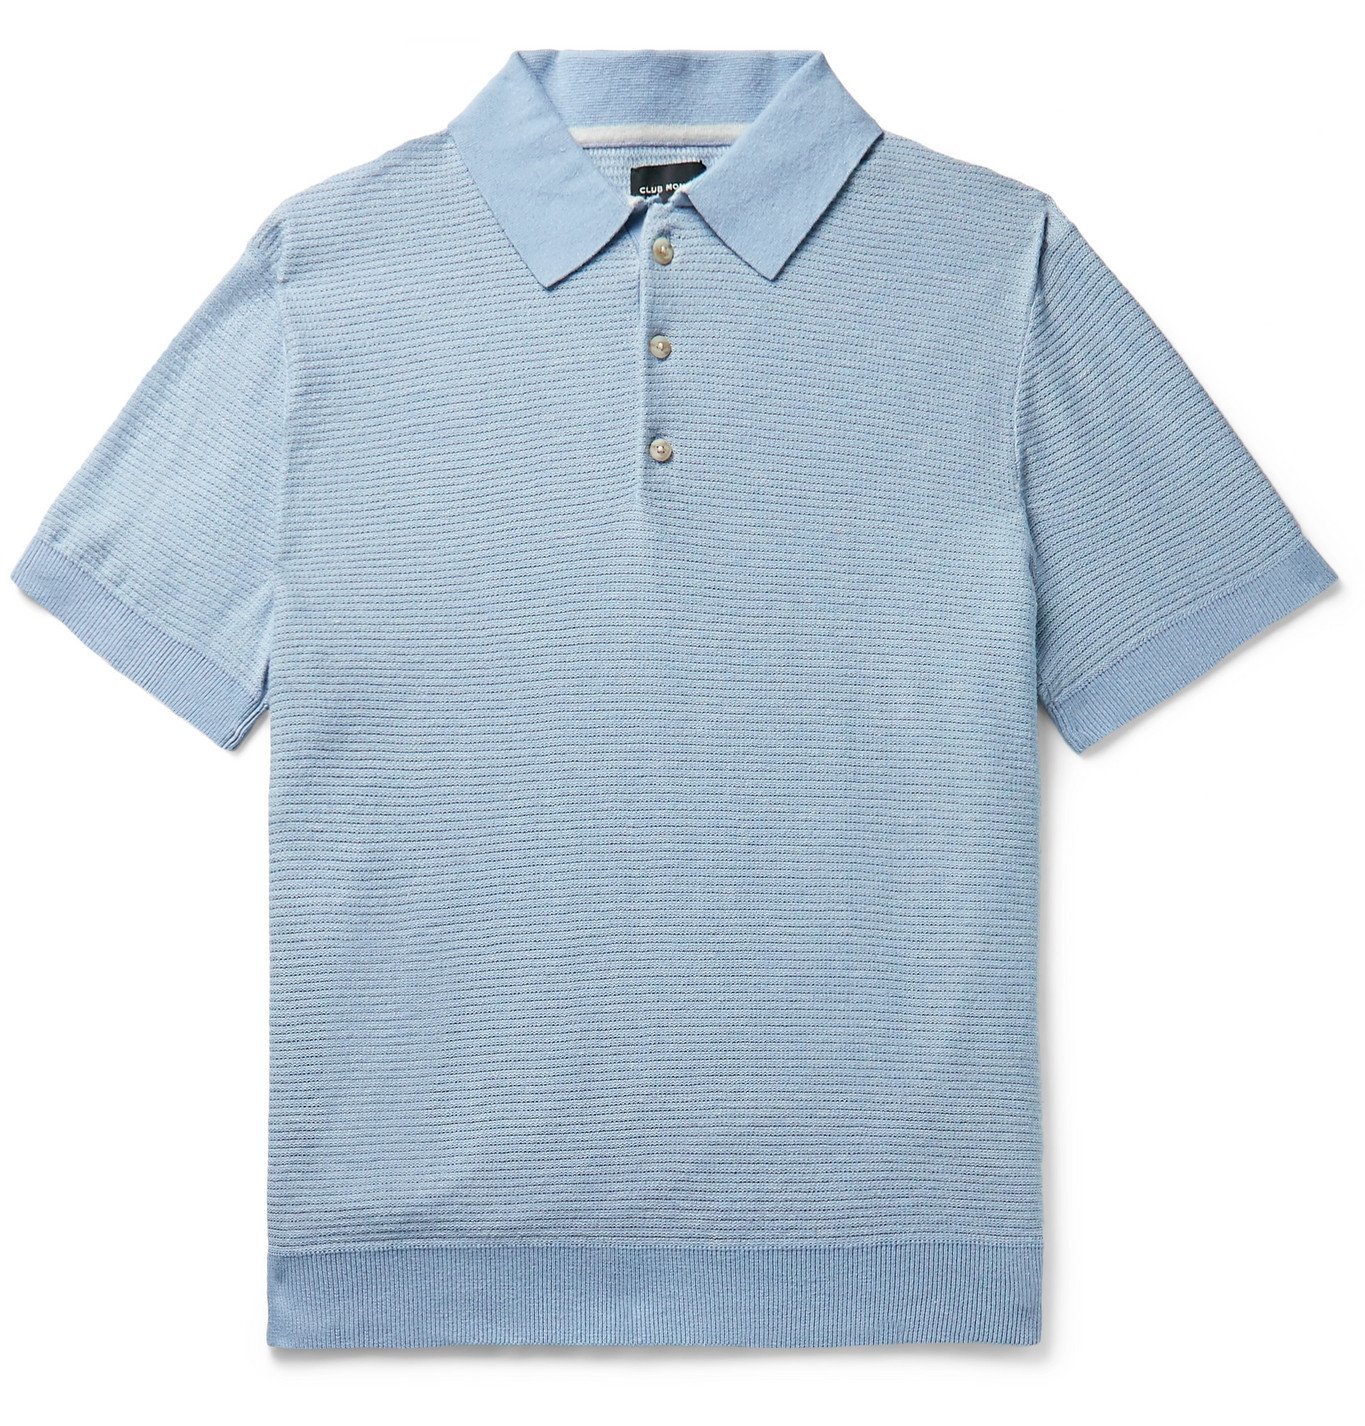 Club Monaco - Striped Cotton and Linen-Blend Polo Shirt - Blue Club Monaco